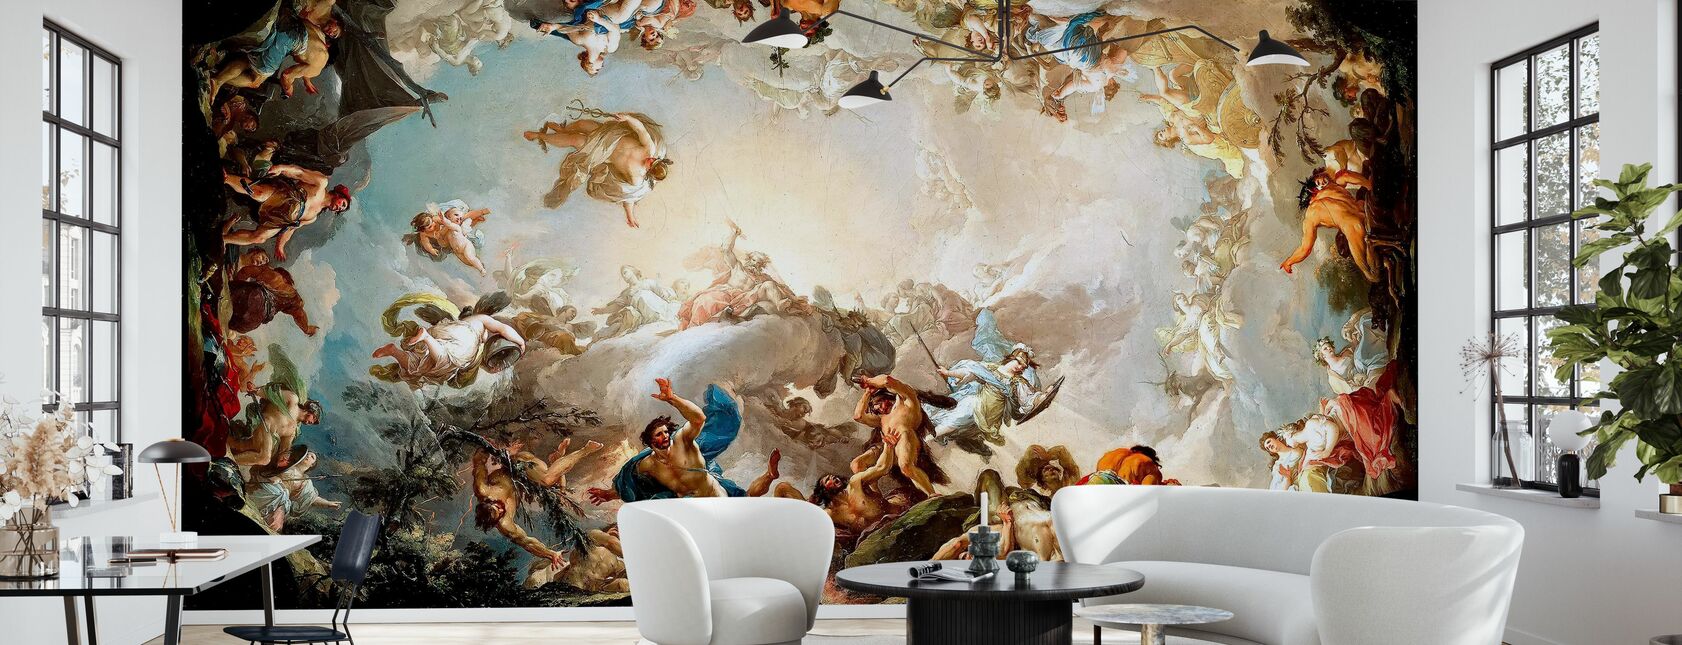 Renaissance Circle - Wallpaper - Living Room